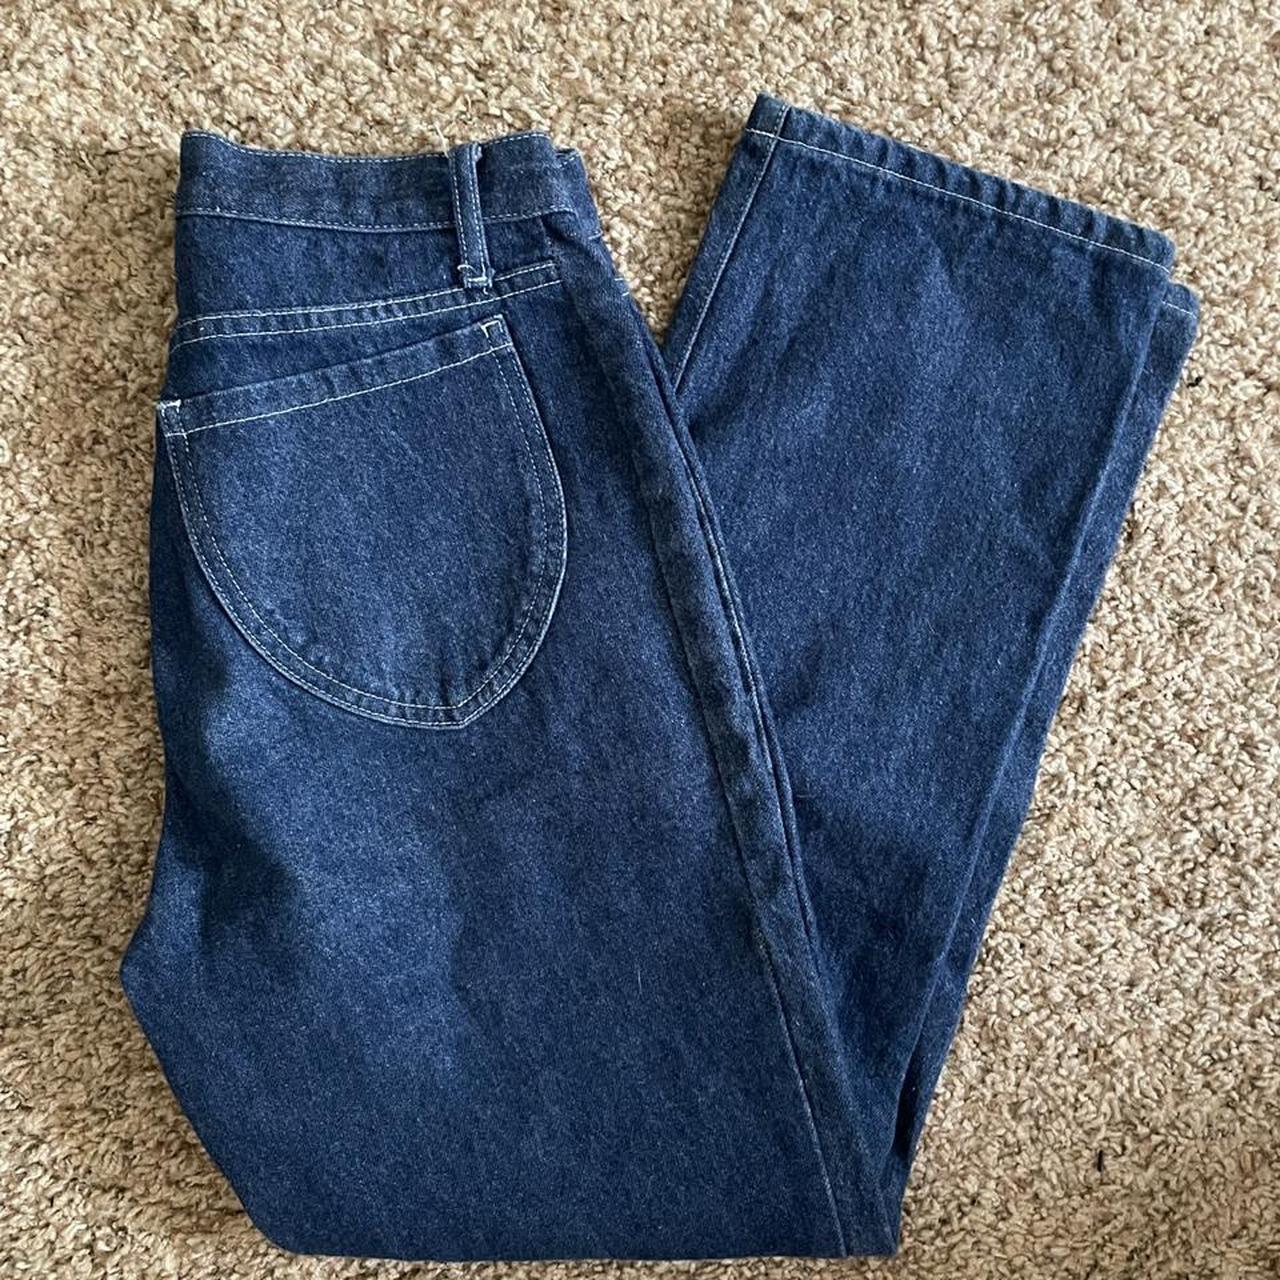 Product Image 2 - Lykke Wullf jeans, labeled size